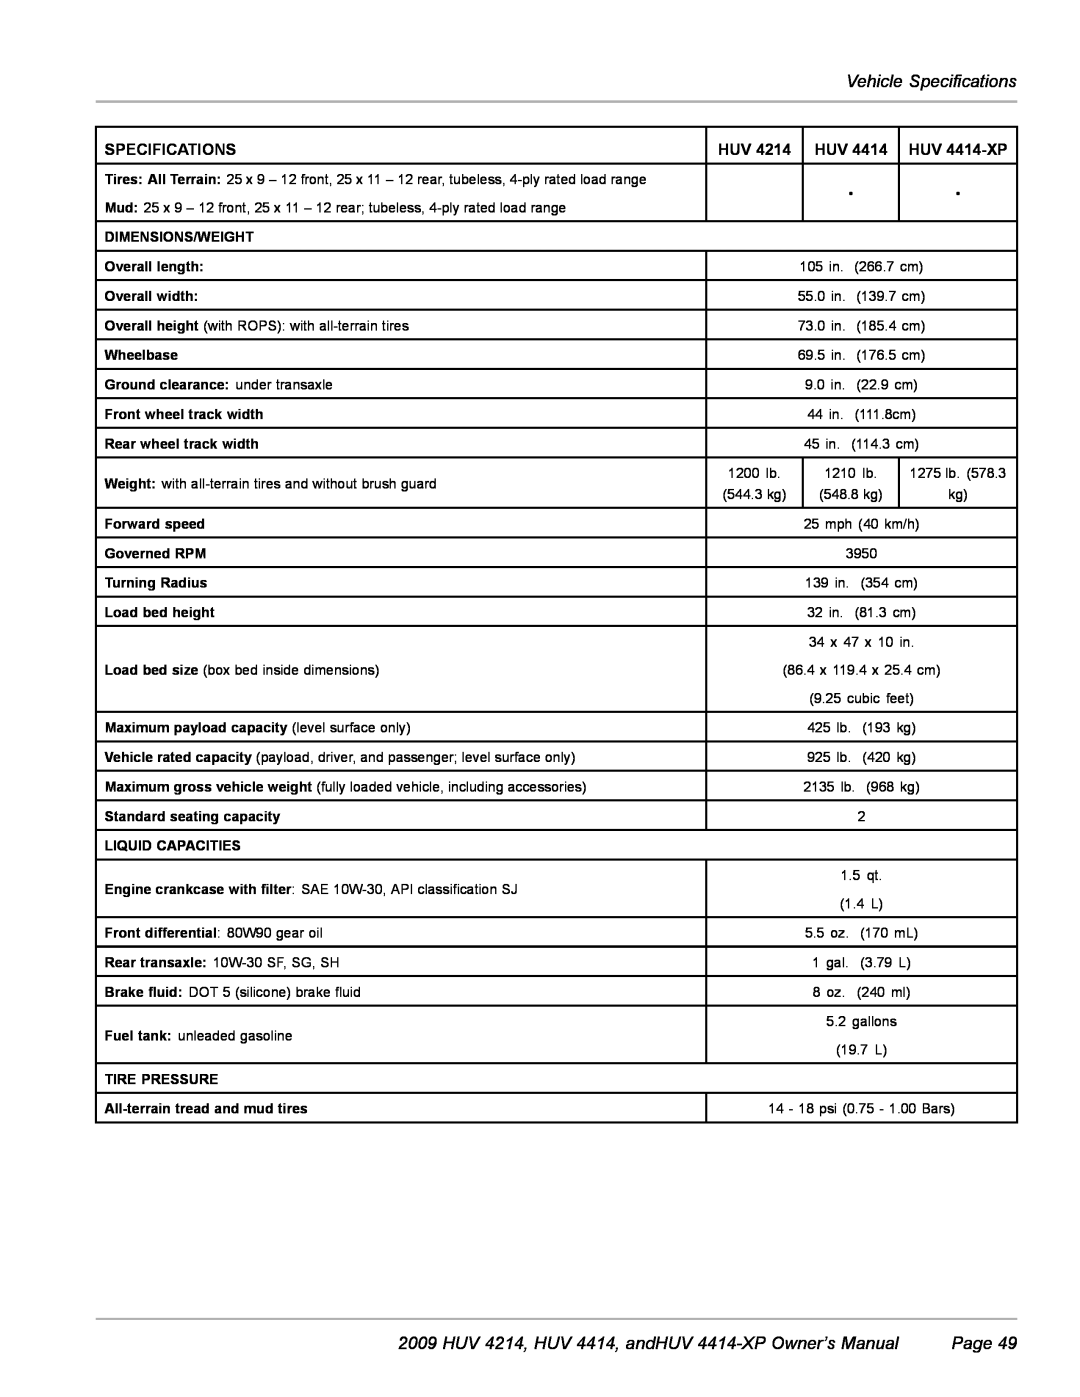 Husqvarna owner manual Vehicle Specifications, HUV 4214, HUV 4414, andHUV 4414-XP Owner’s Manual, Page 